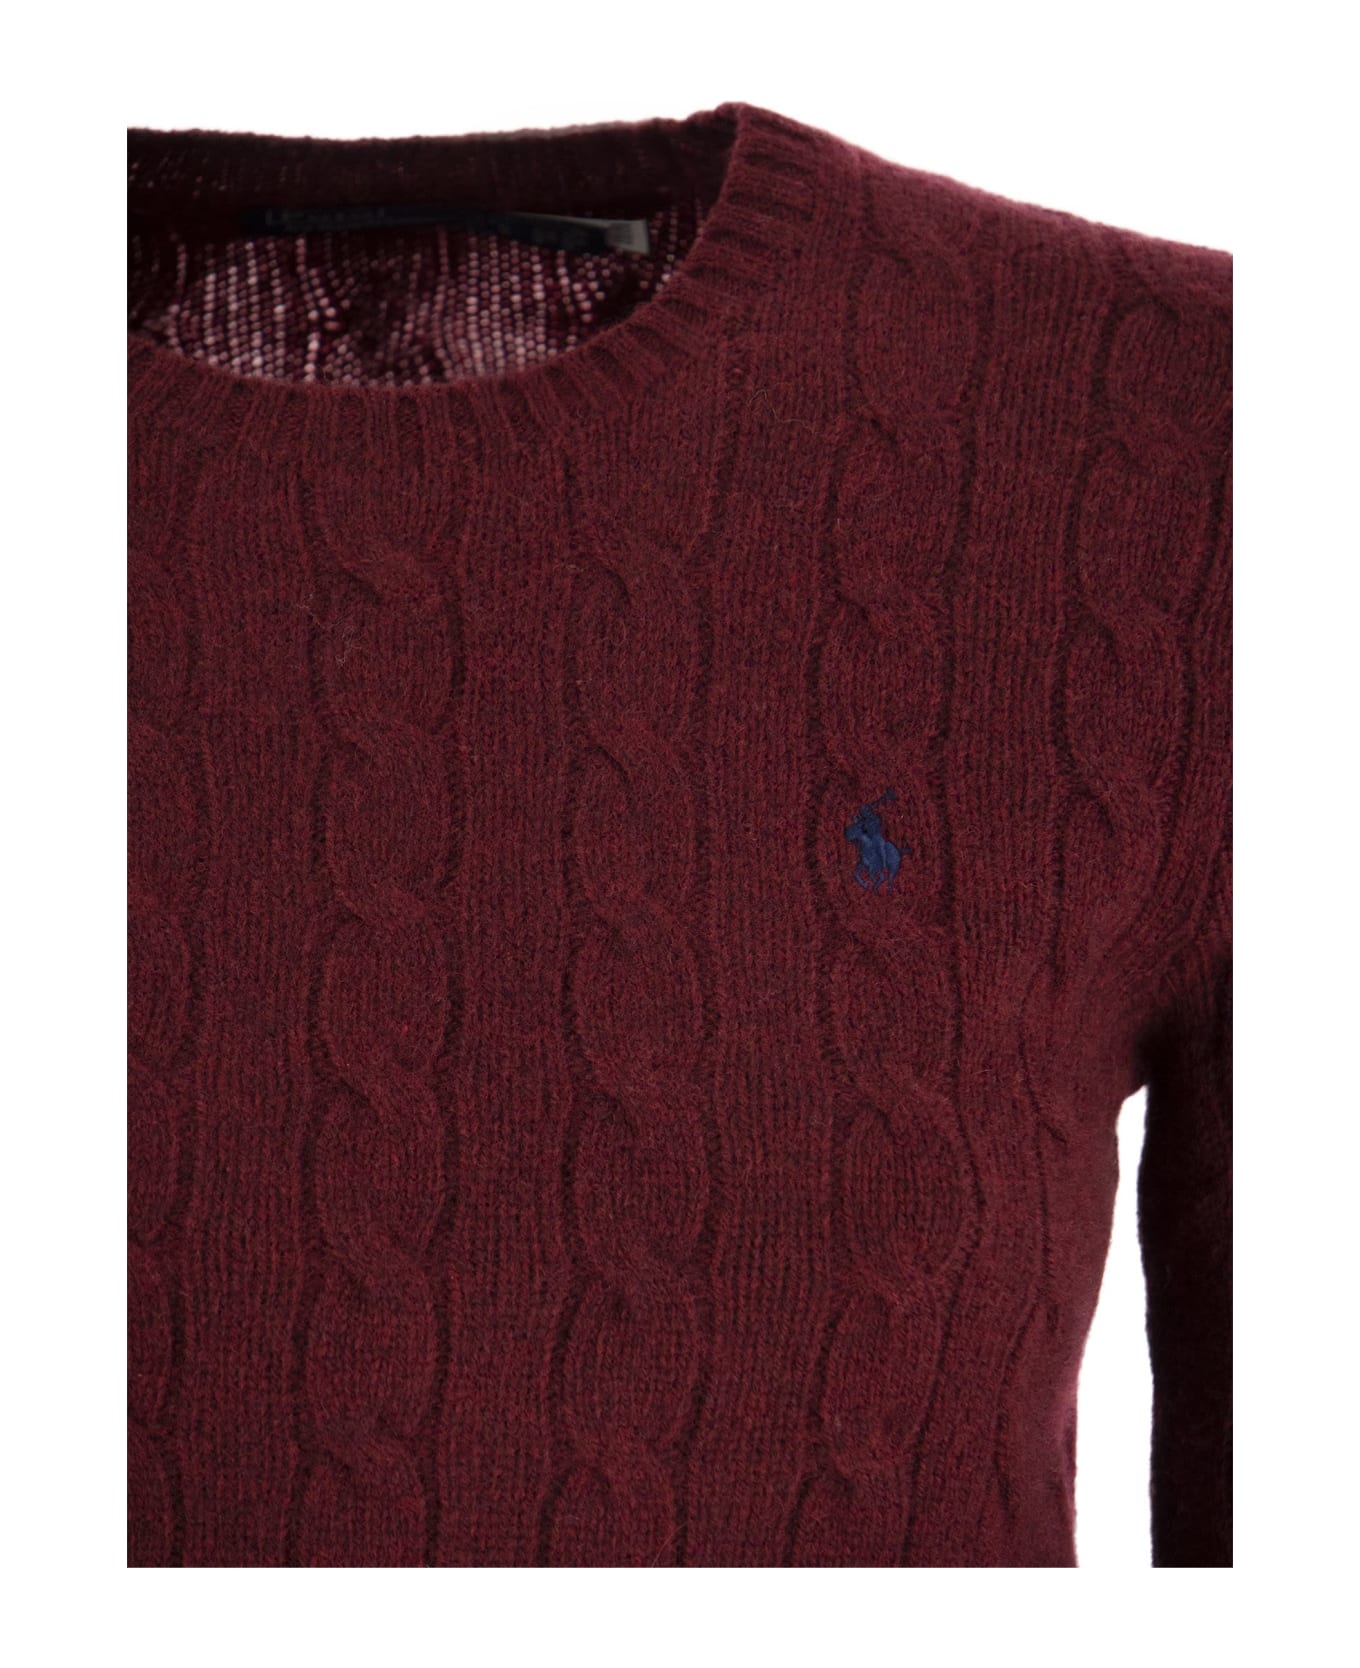 Polo Ralph Lauren Pony Sweater - Bordeaux